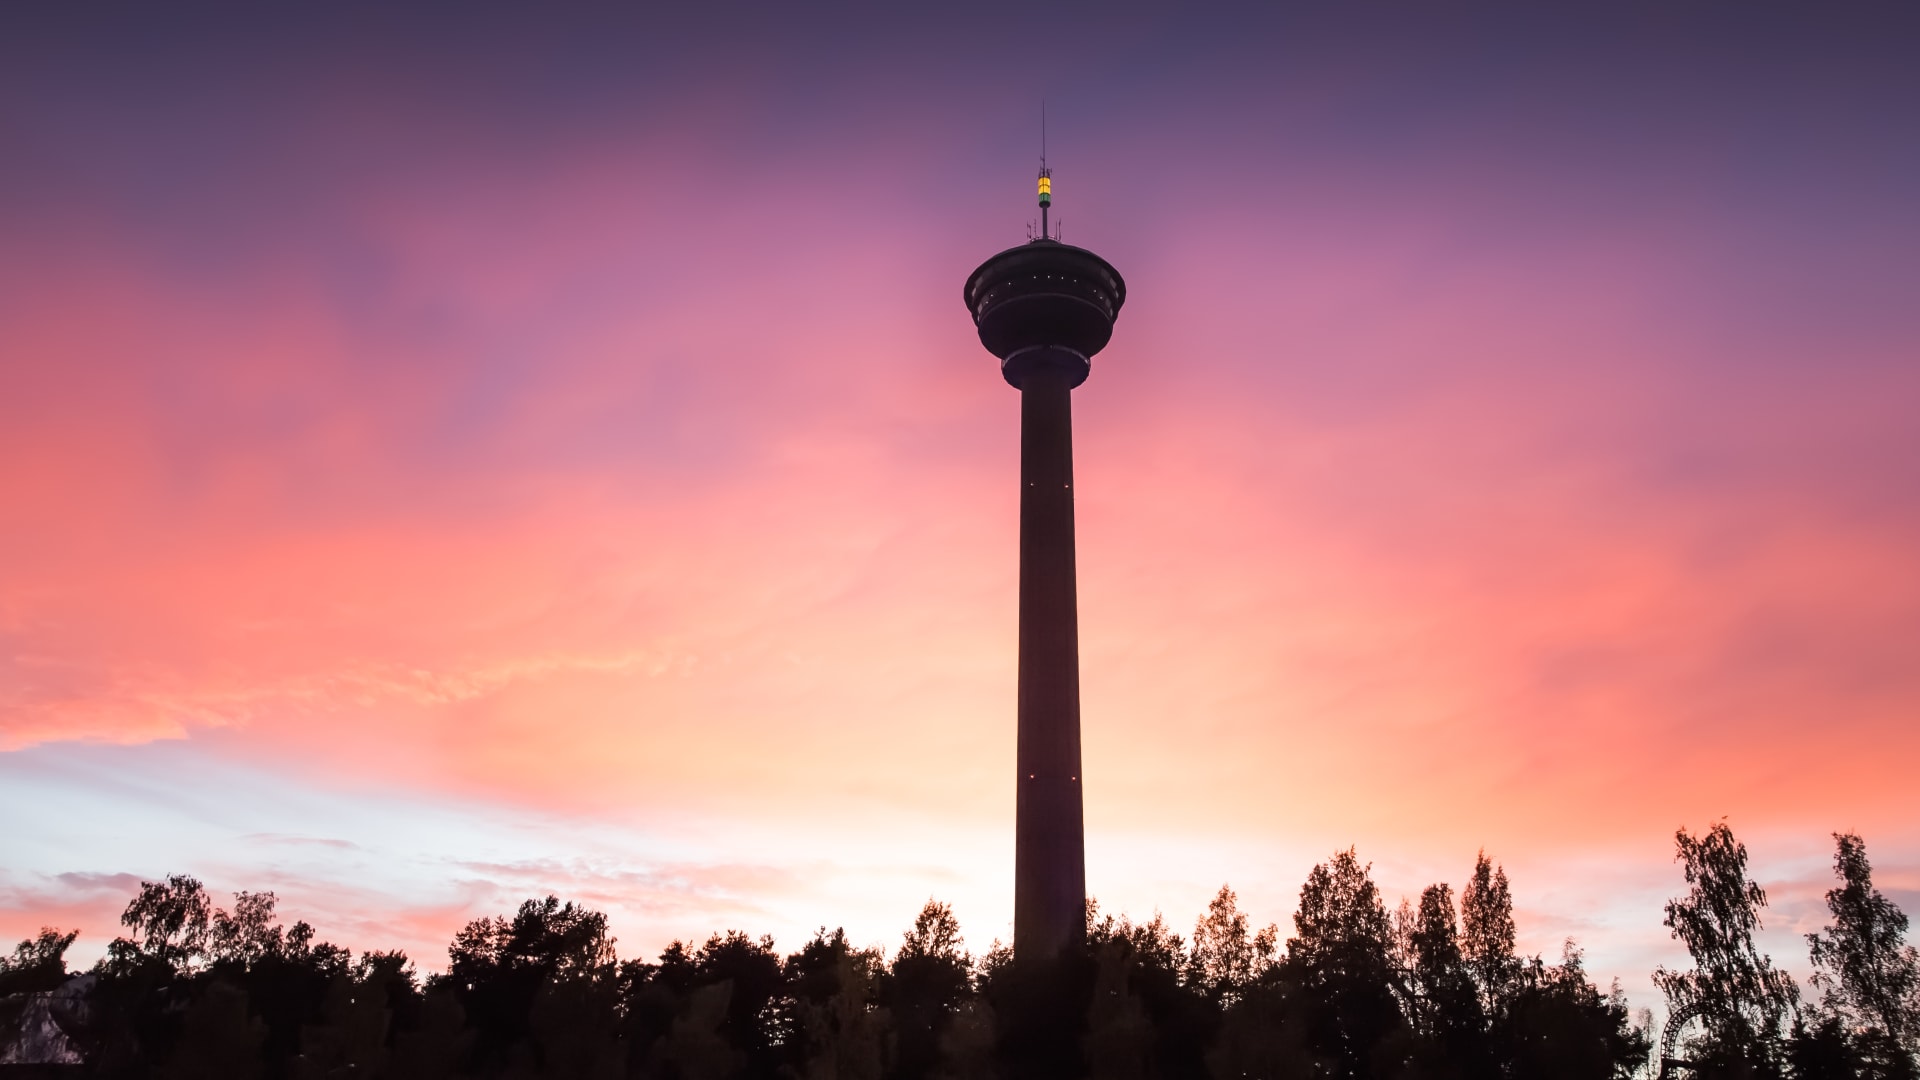 Näsinneula Observation Tower at night